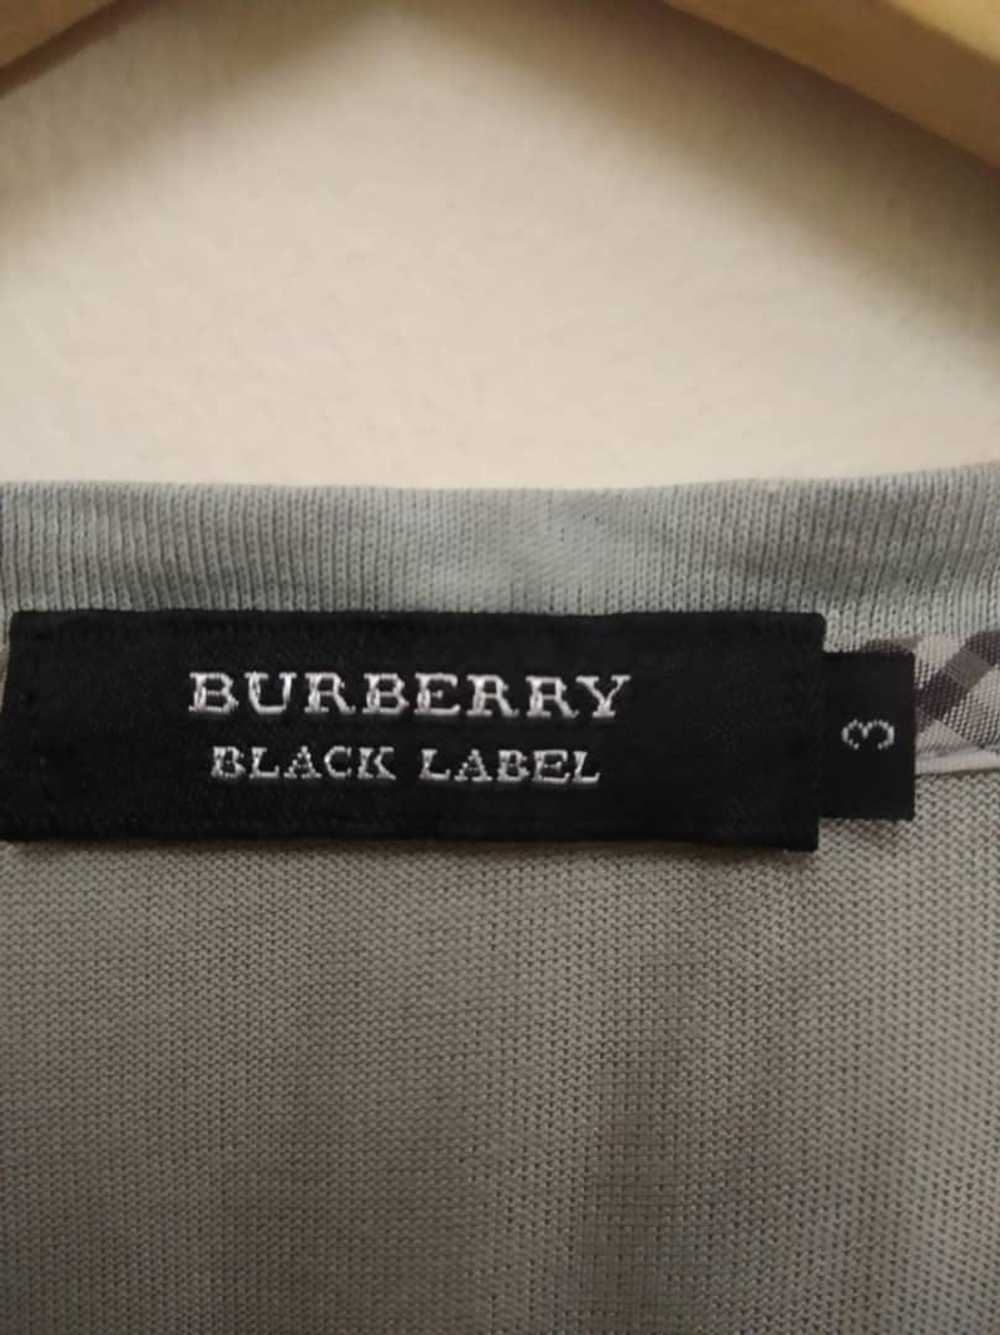 Burberry Burberry Black Label Button Up Shirt - image 6